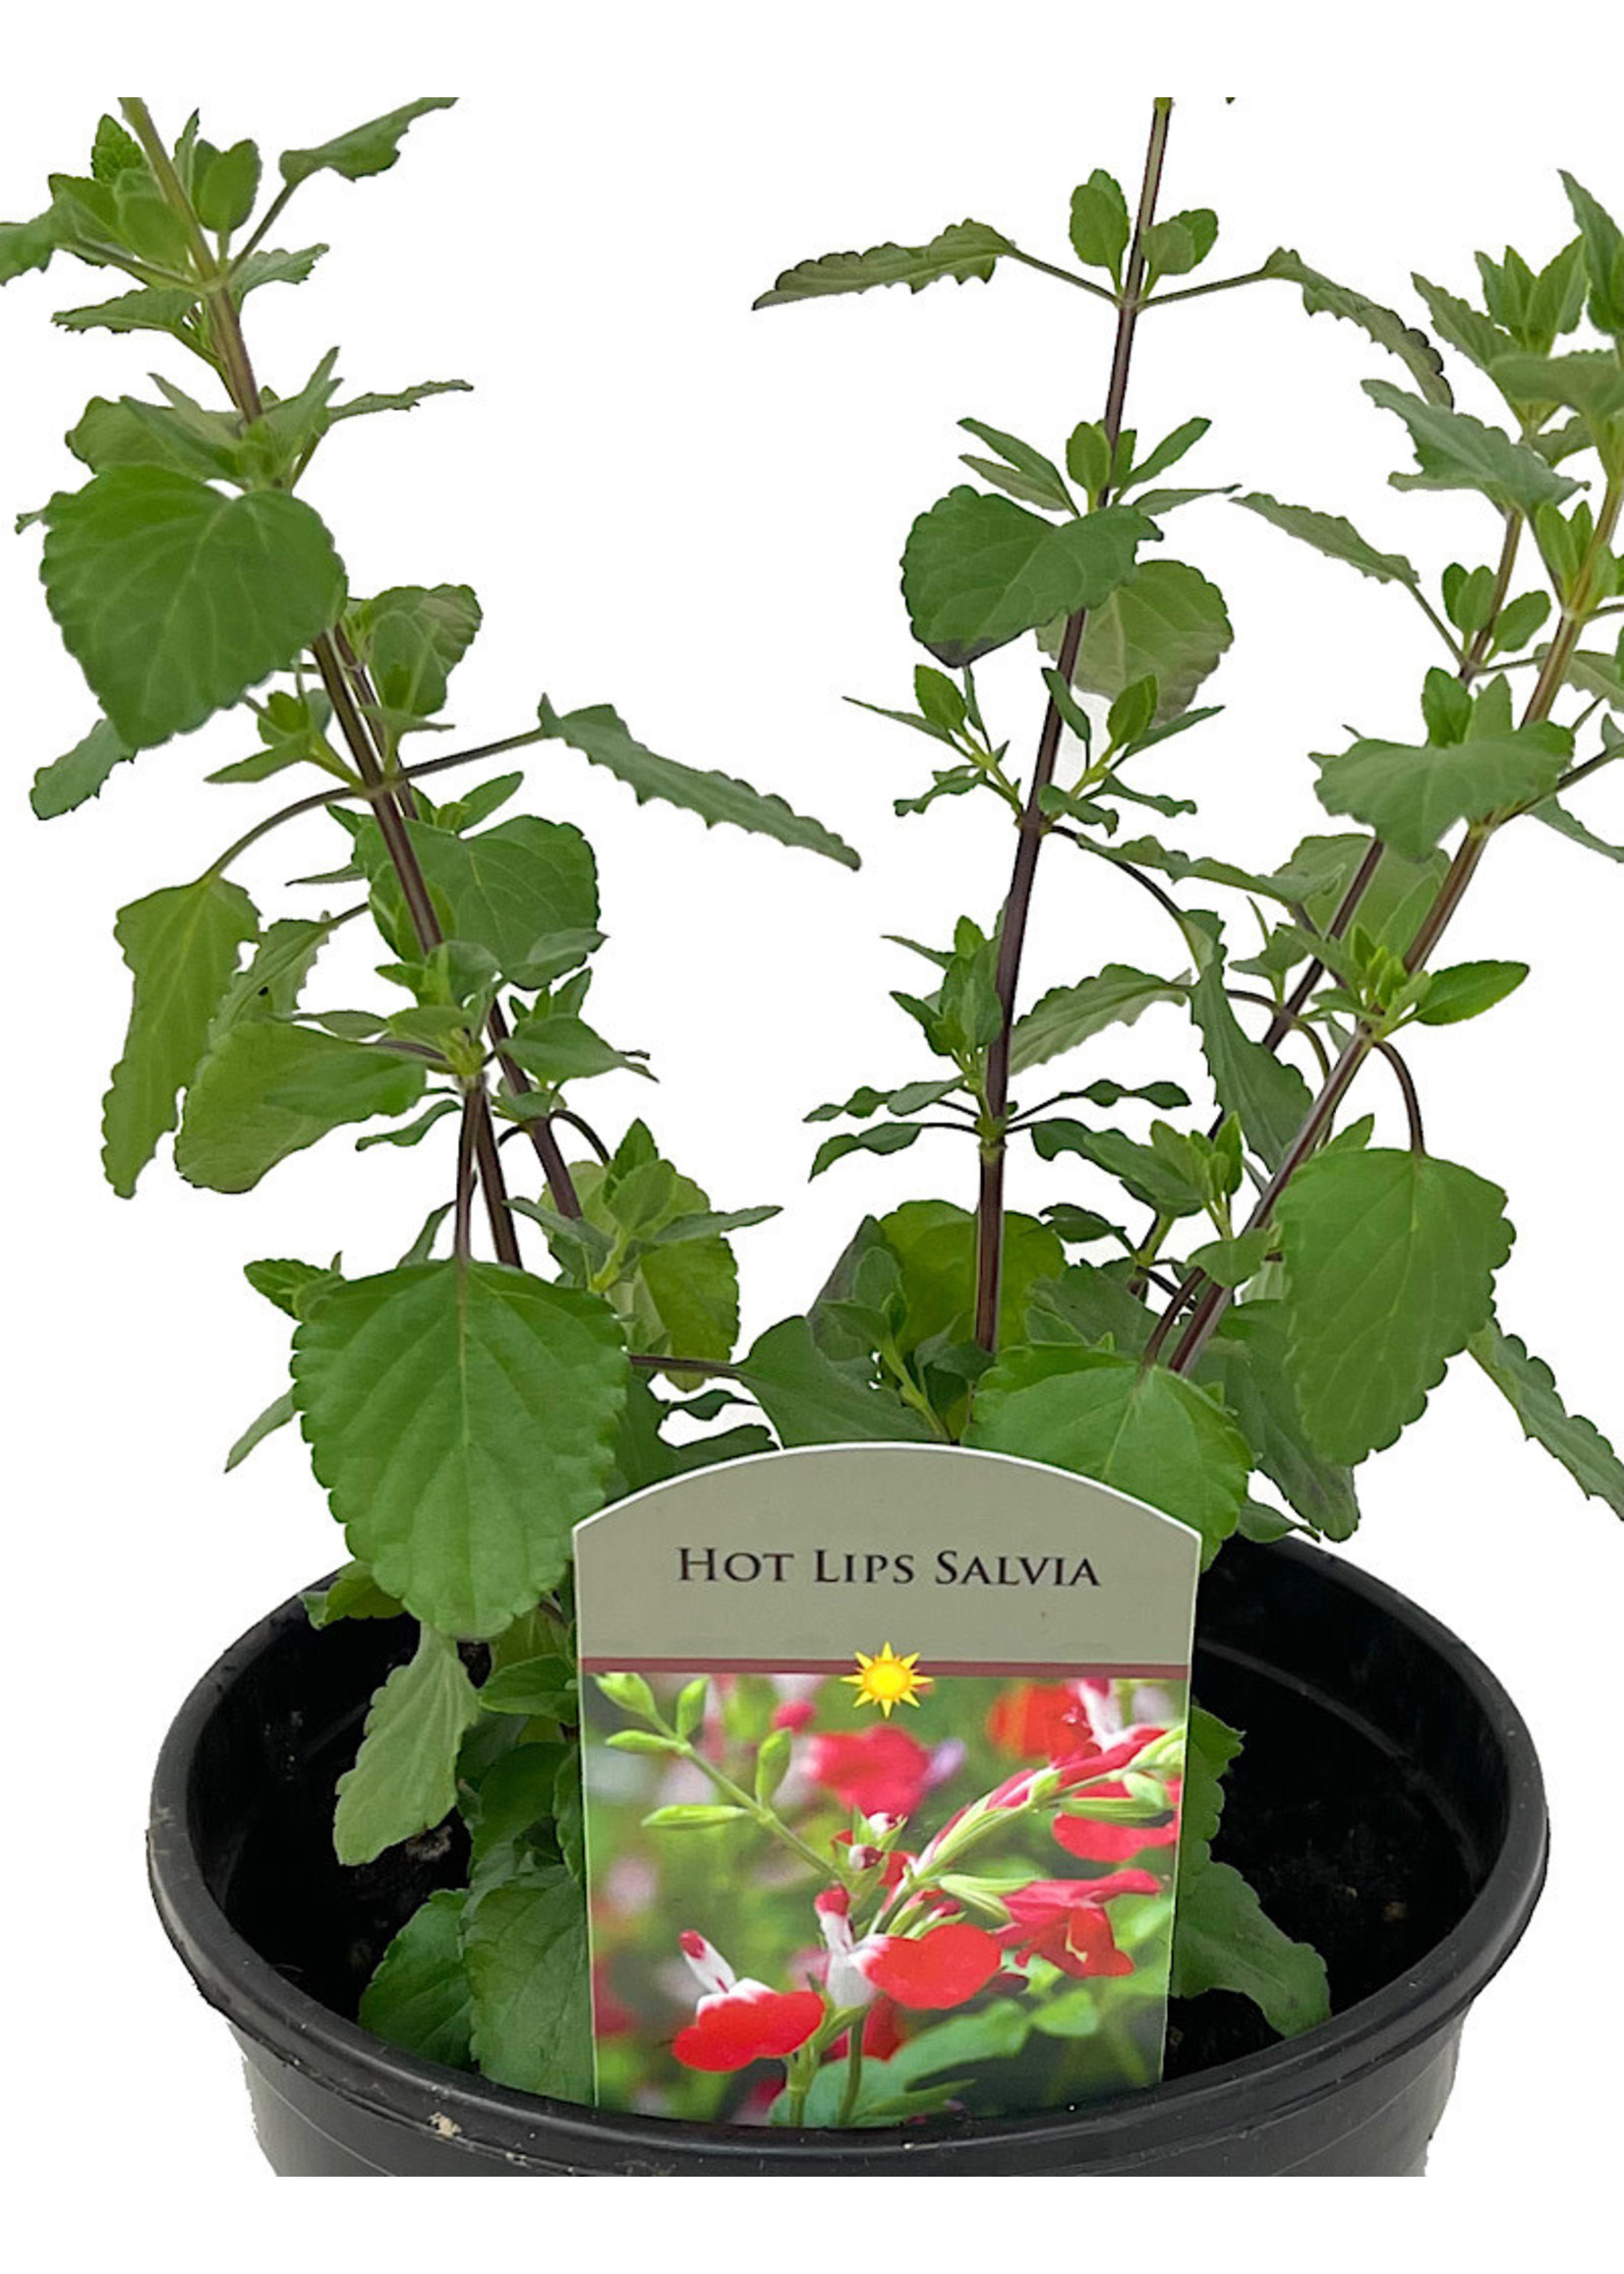 Salvia greggii 'Hot Lips' 1 Gallon